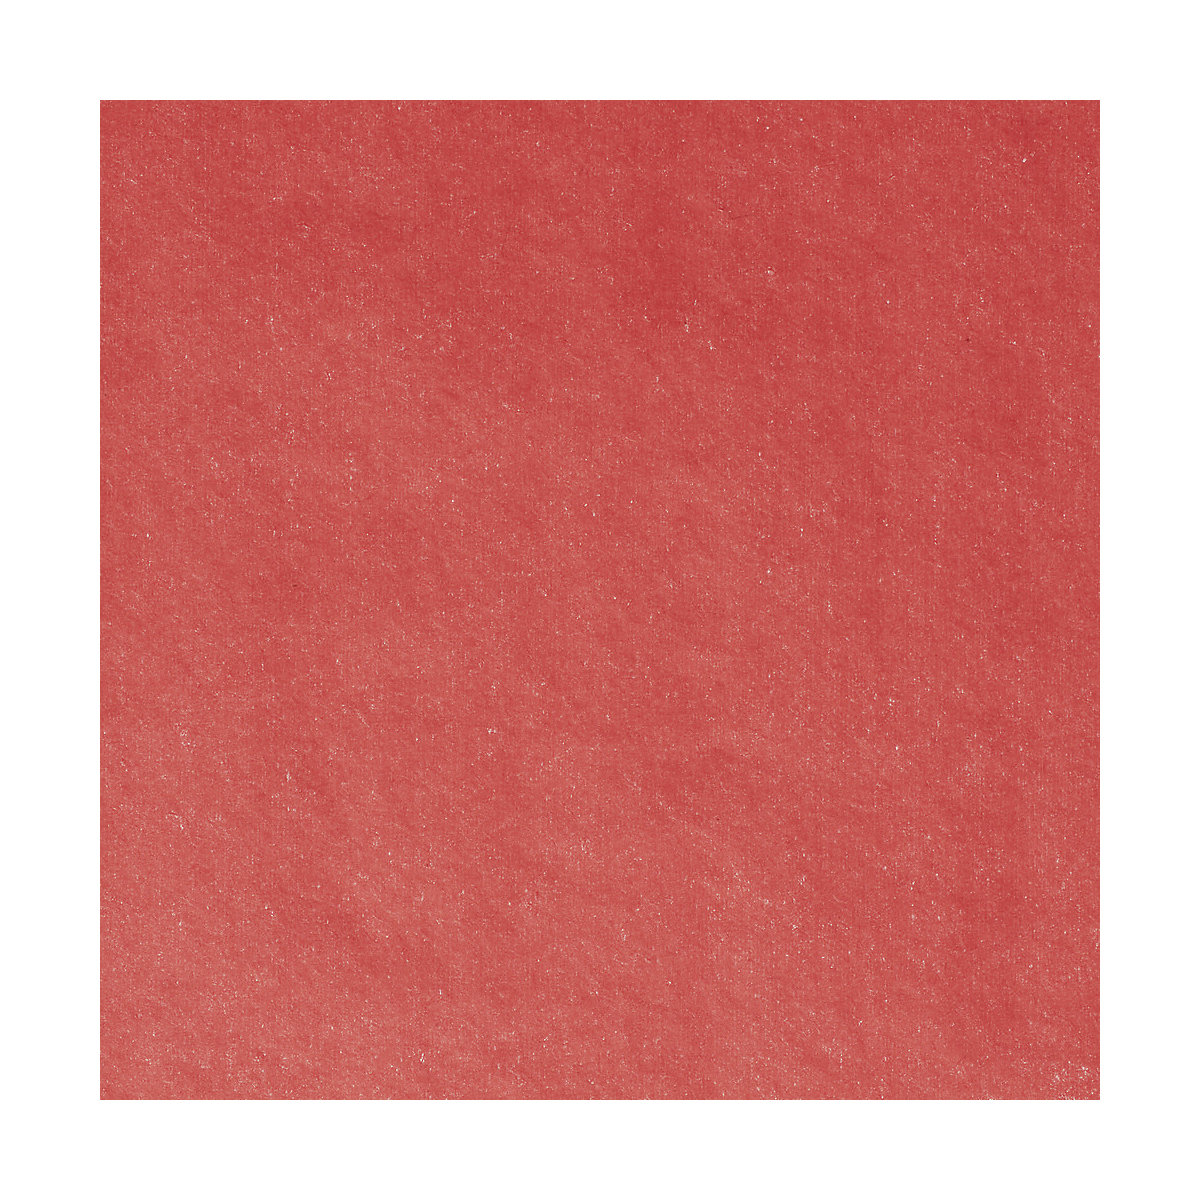 Geschenk-Seidenpapier, 30 g/m², Bogenformat 750 x 500 mm, rot, VE 880 Stk, ab 10 VE-2